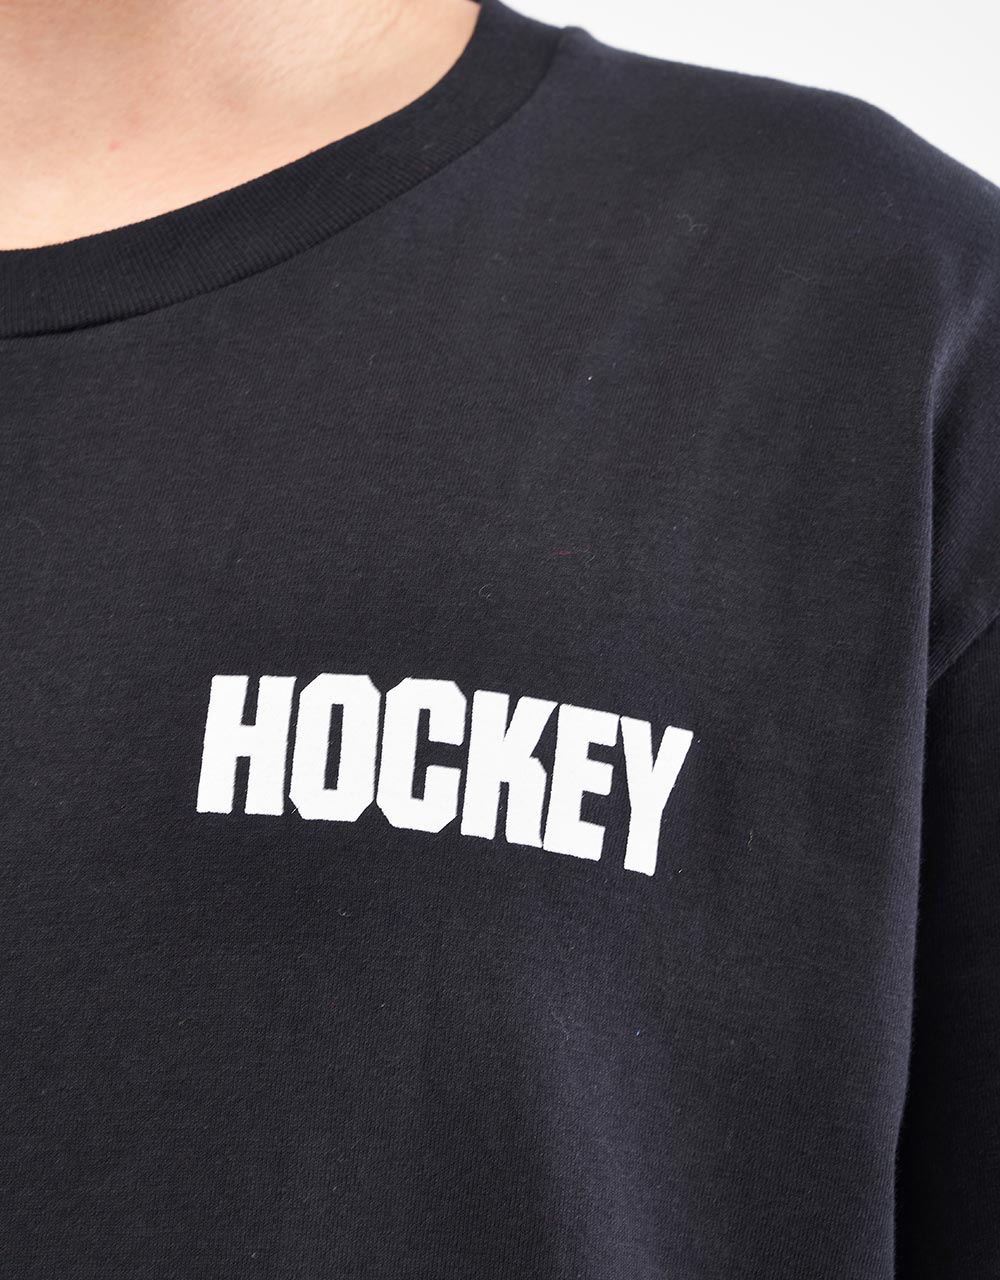 Hockey x Independent T-Shirt - Black